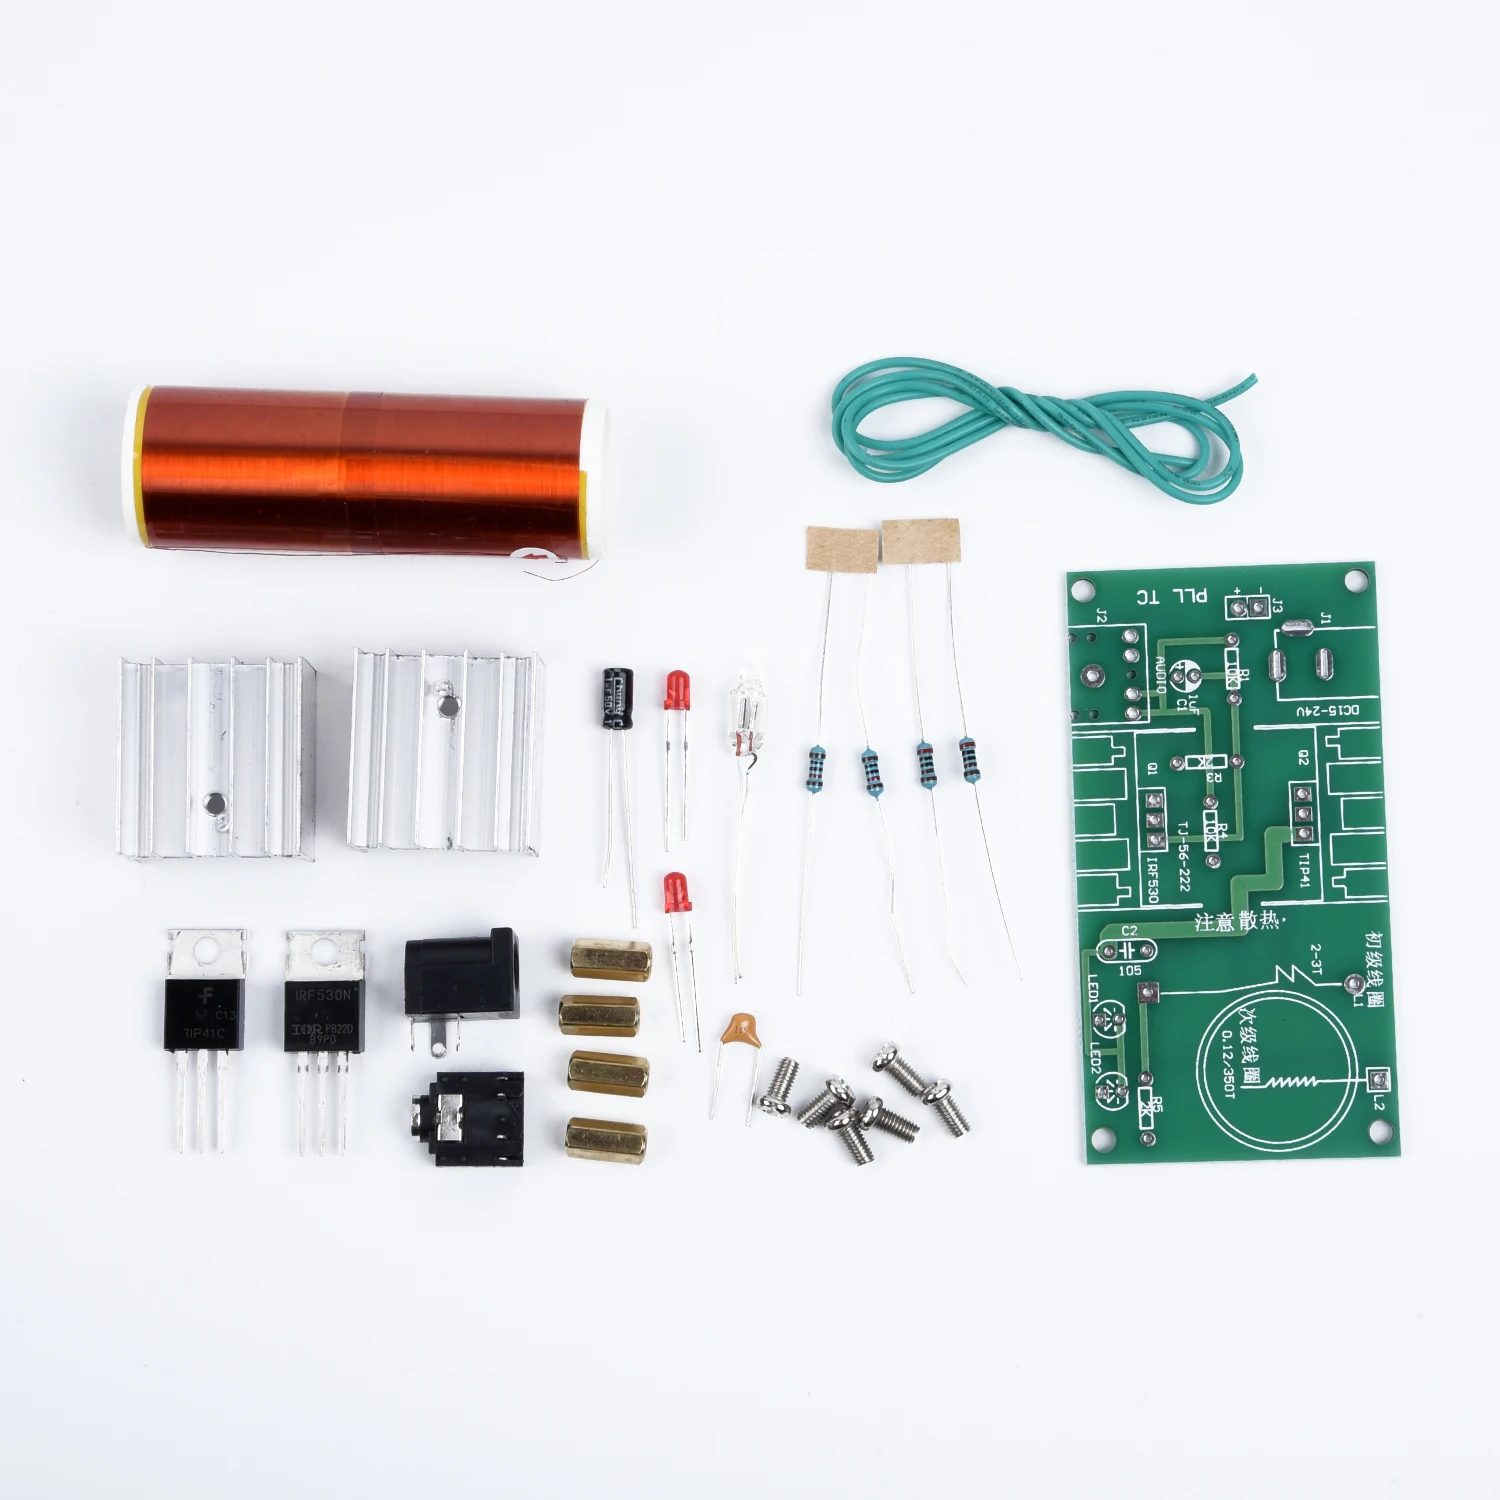 

Mini Tesla Coil Plasma Speaker Electronic Kit 15W DIY Kits DIY Tesla Coil Kit Suitable For School Scientific Research Projects